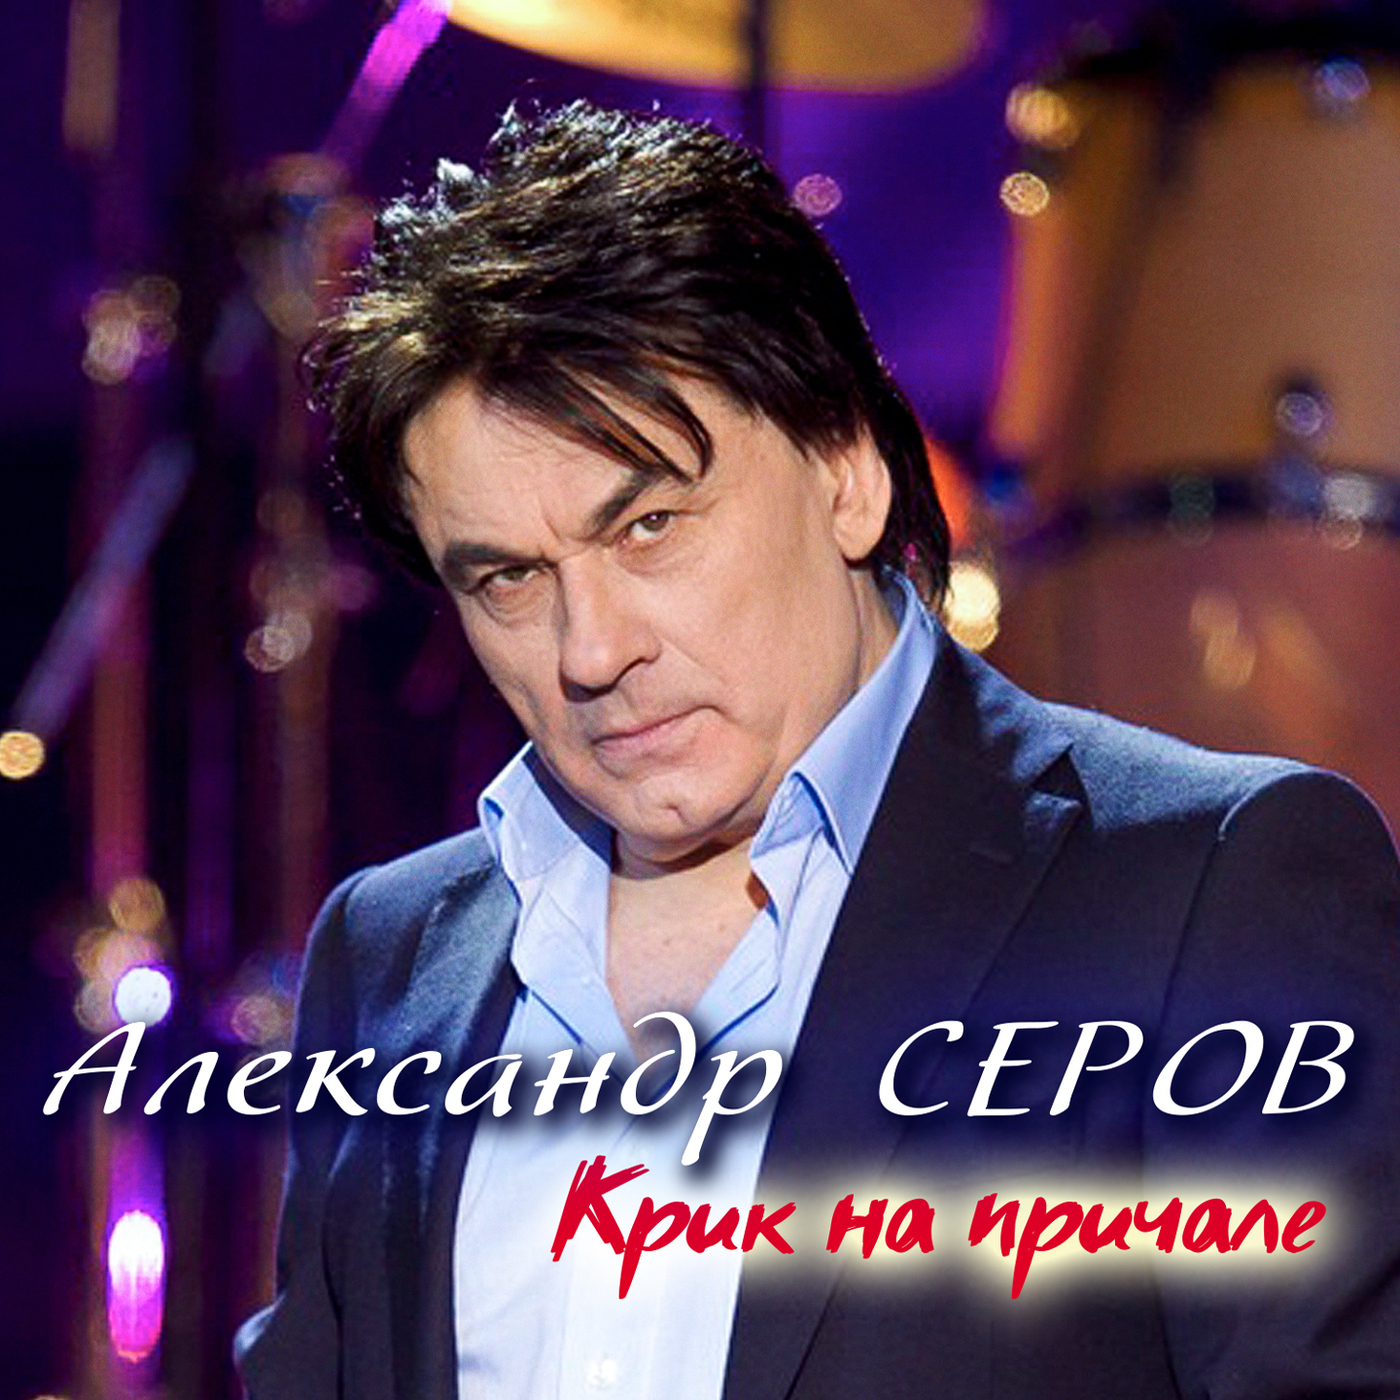 Александр Серов CD 2000